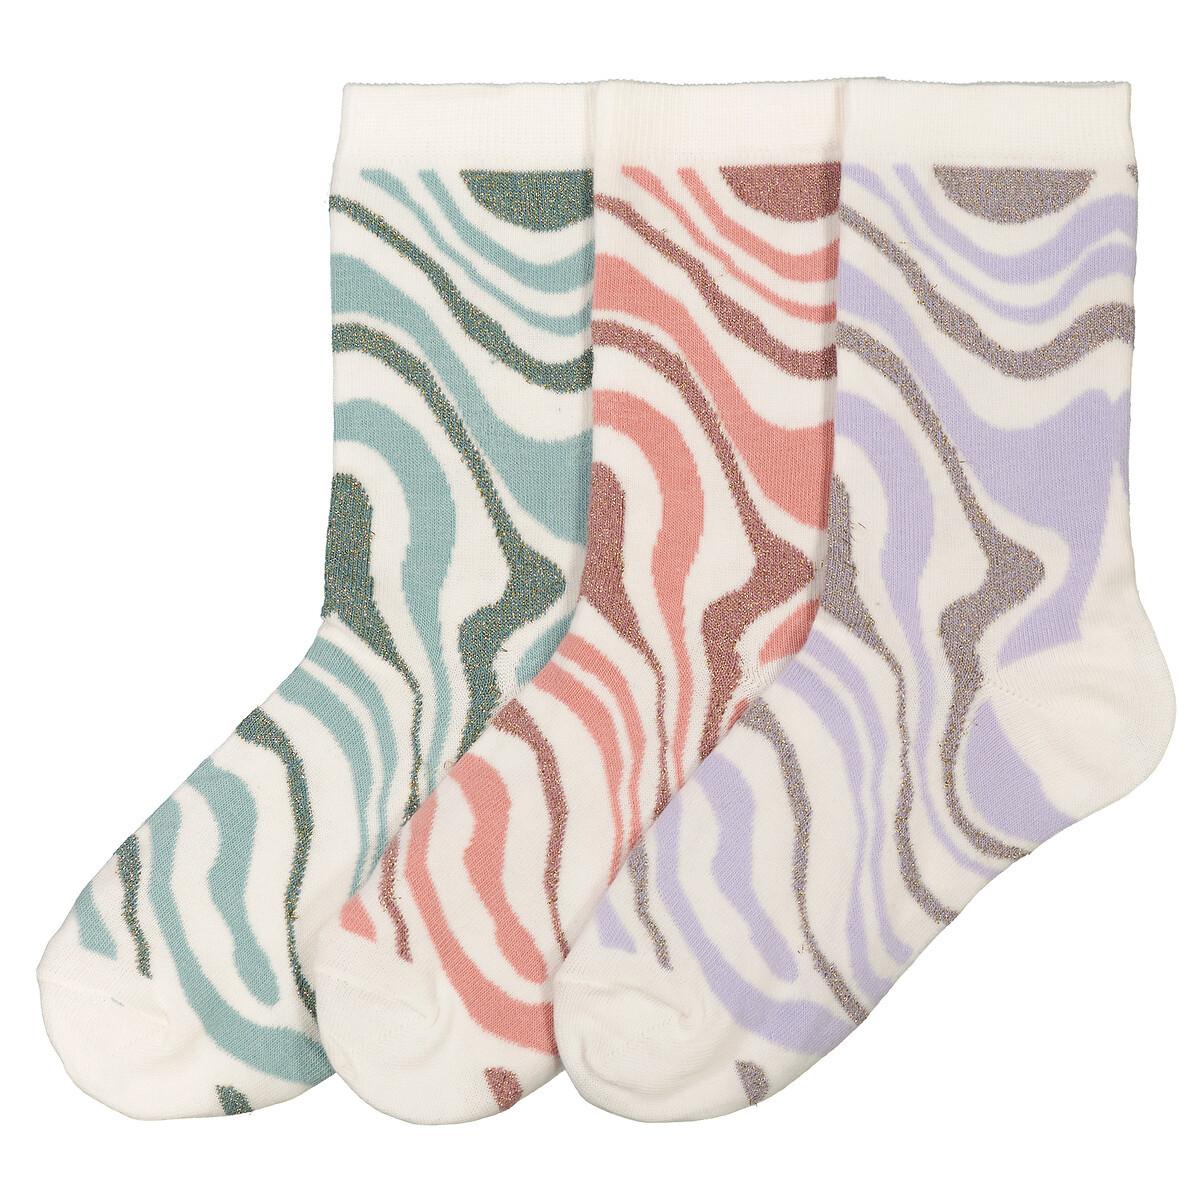 3er-pack Socken Mit Zebramuster Damen Weiss Bedruckt 35-37 von La Redoute Collections